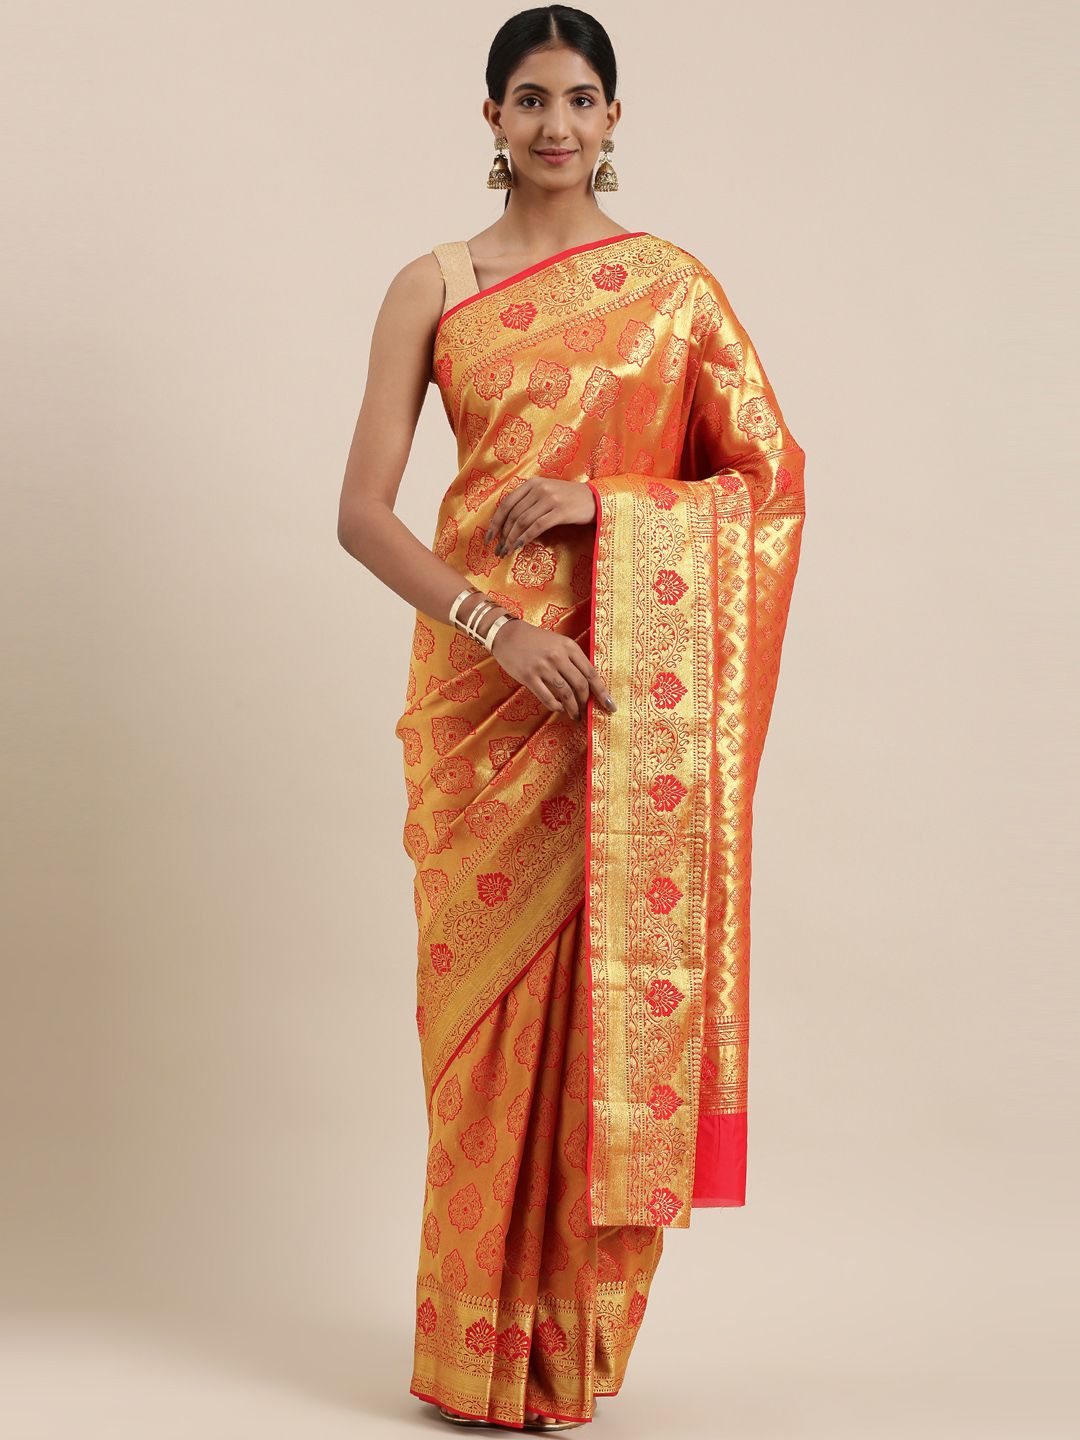 The Chennai Silks Red & Gold-Toned Ethnic Motifs Zari Art Silk Saree Price in India